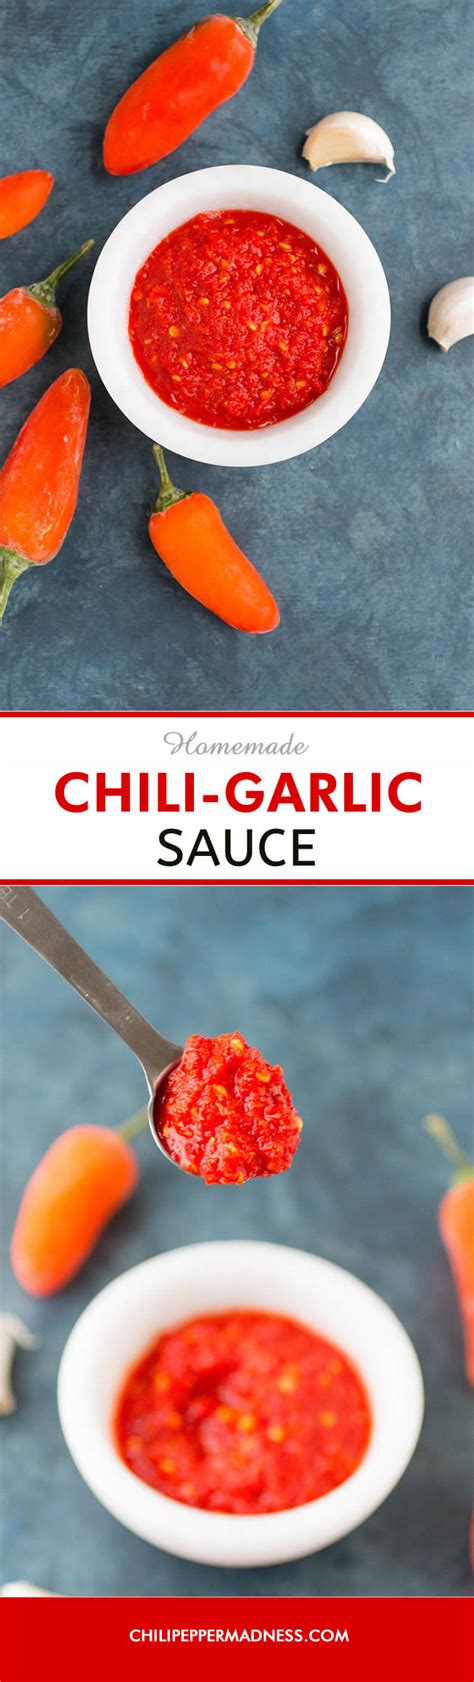 Set the prepared sauce aside. Homemade Chili-Garlic Sauce Recipe - Chili Pepper Madness